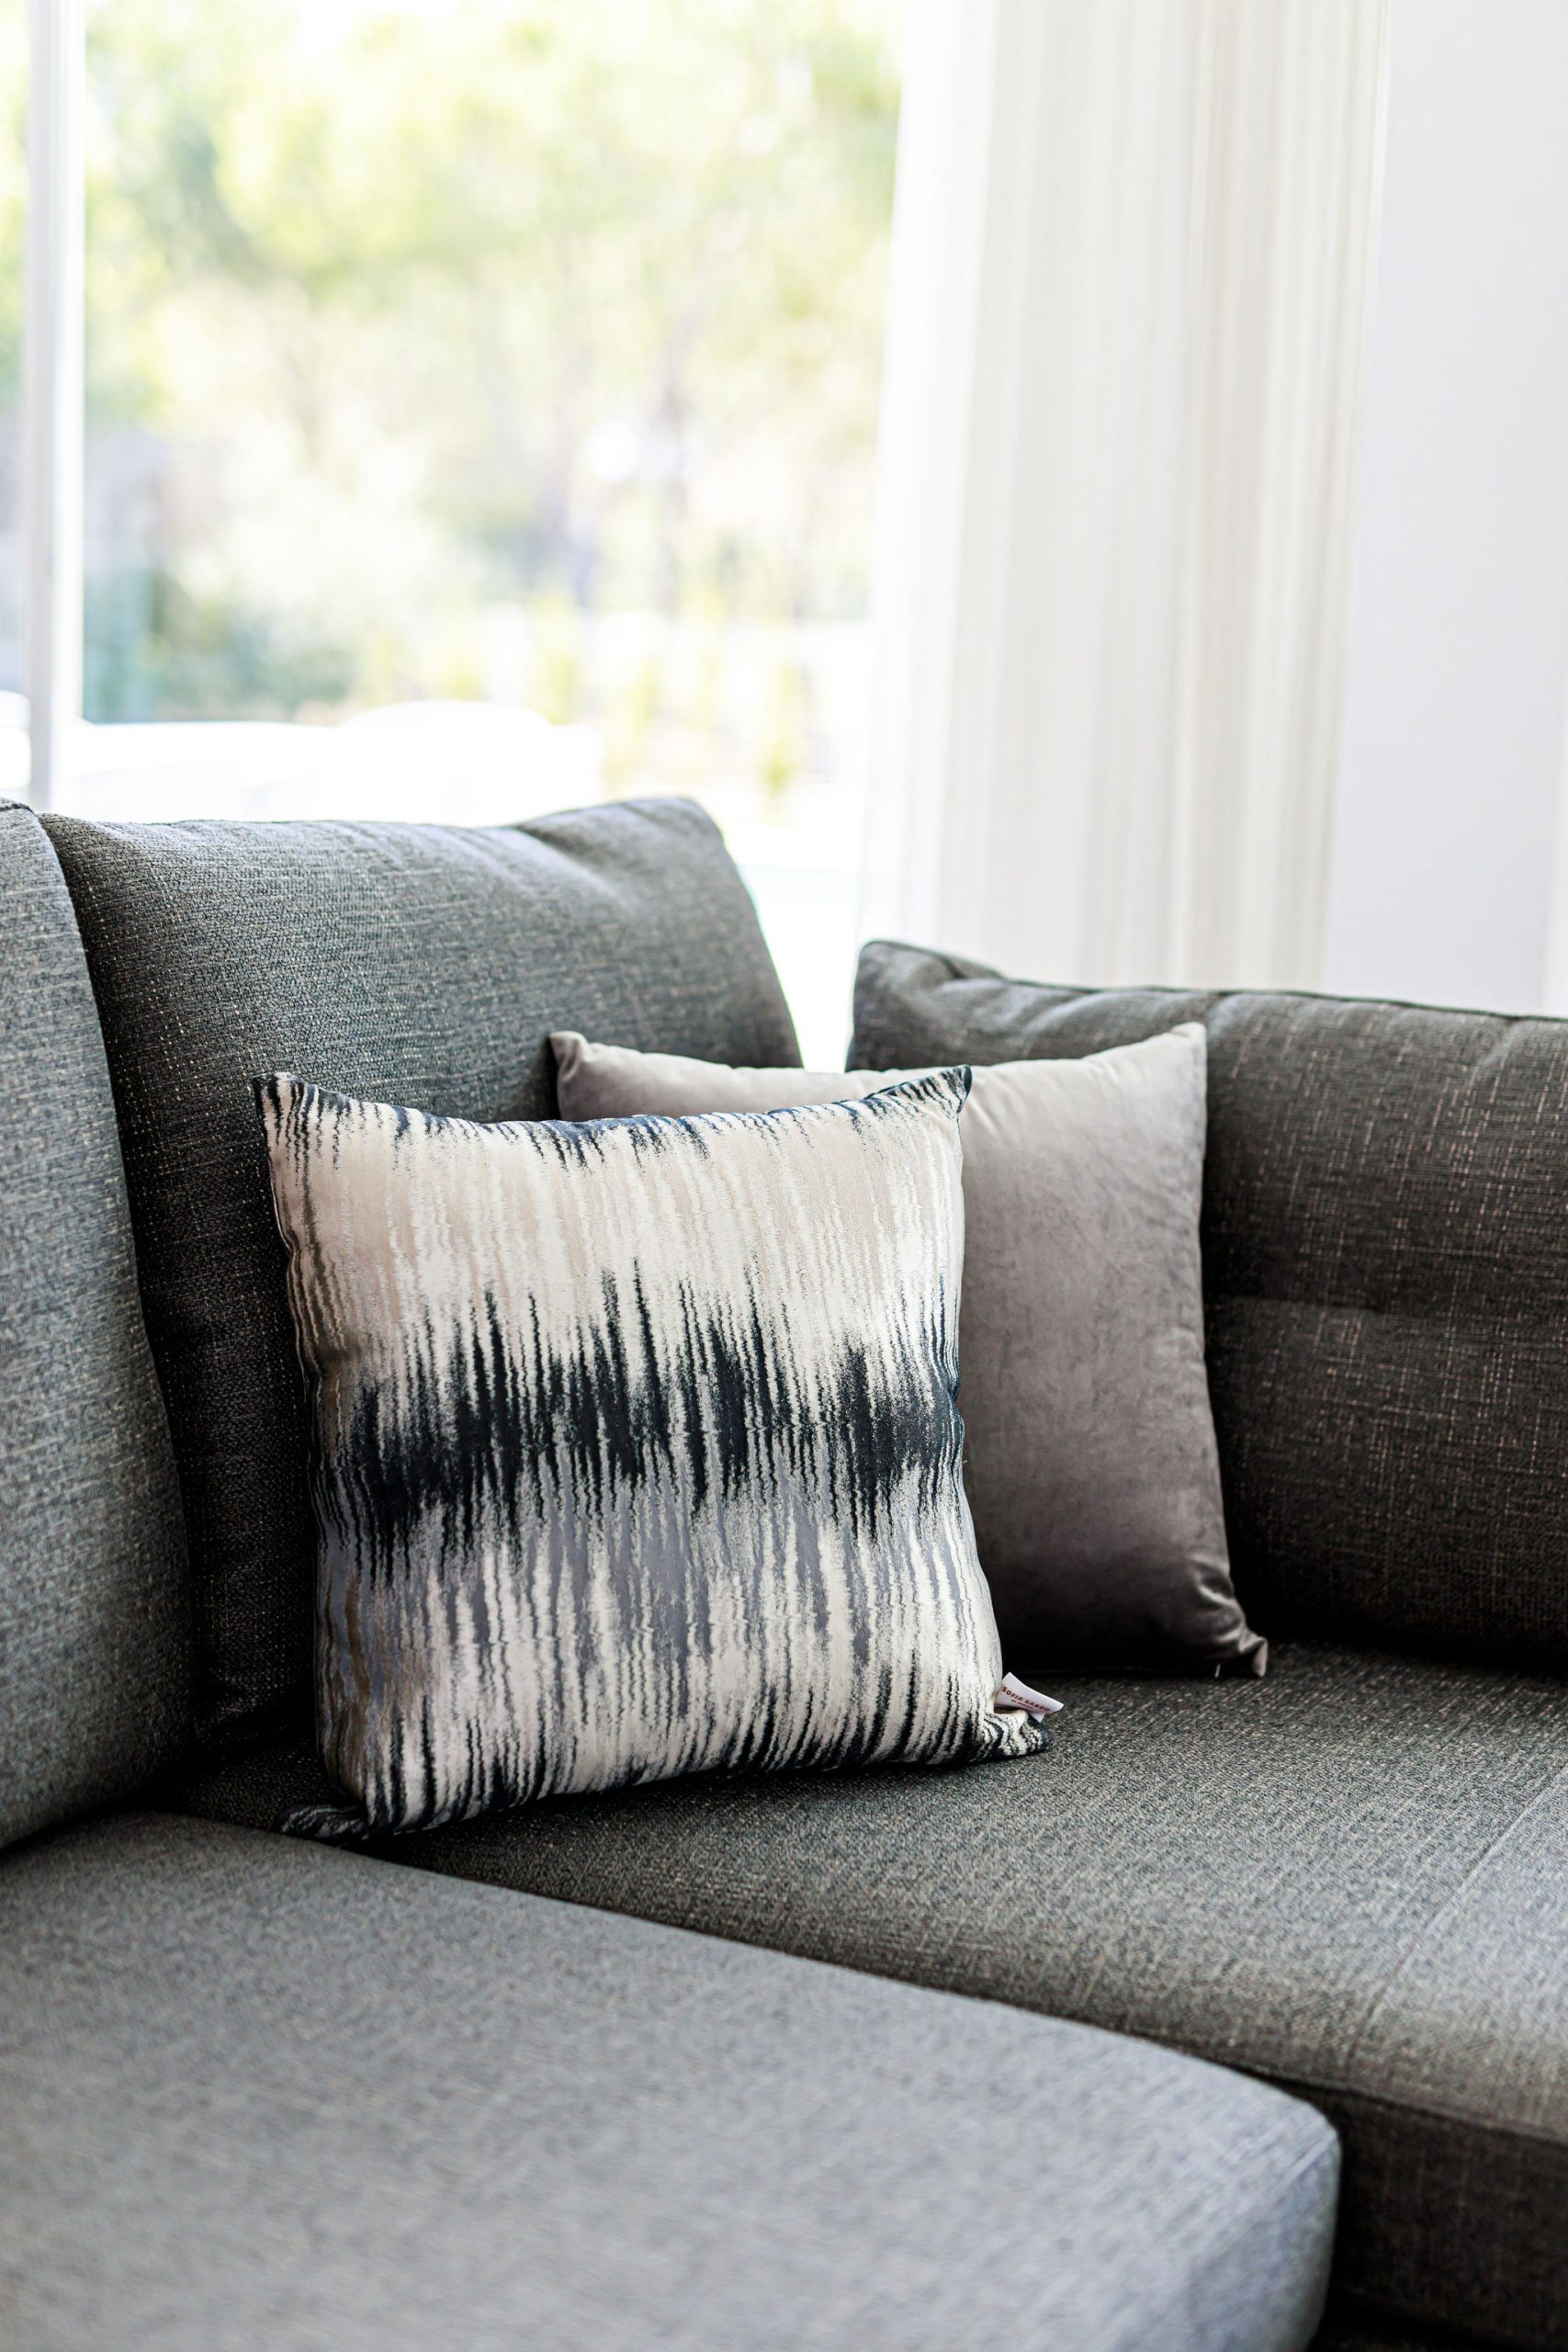 Bespoke textured grey sofa with black cushions